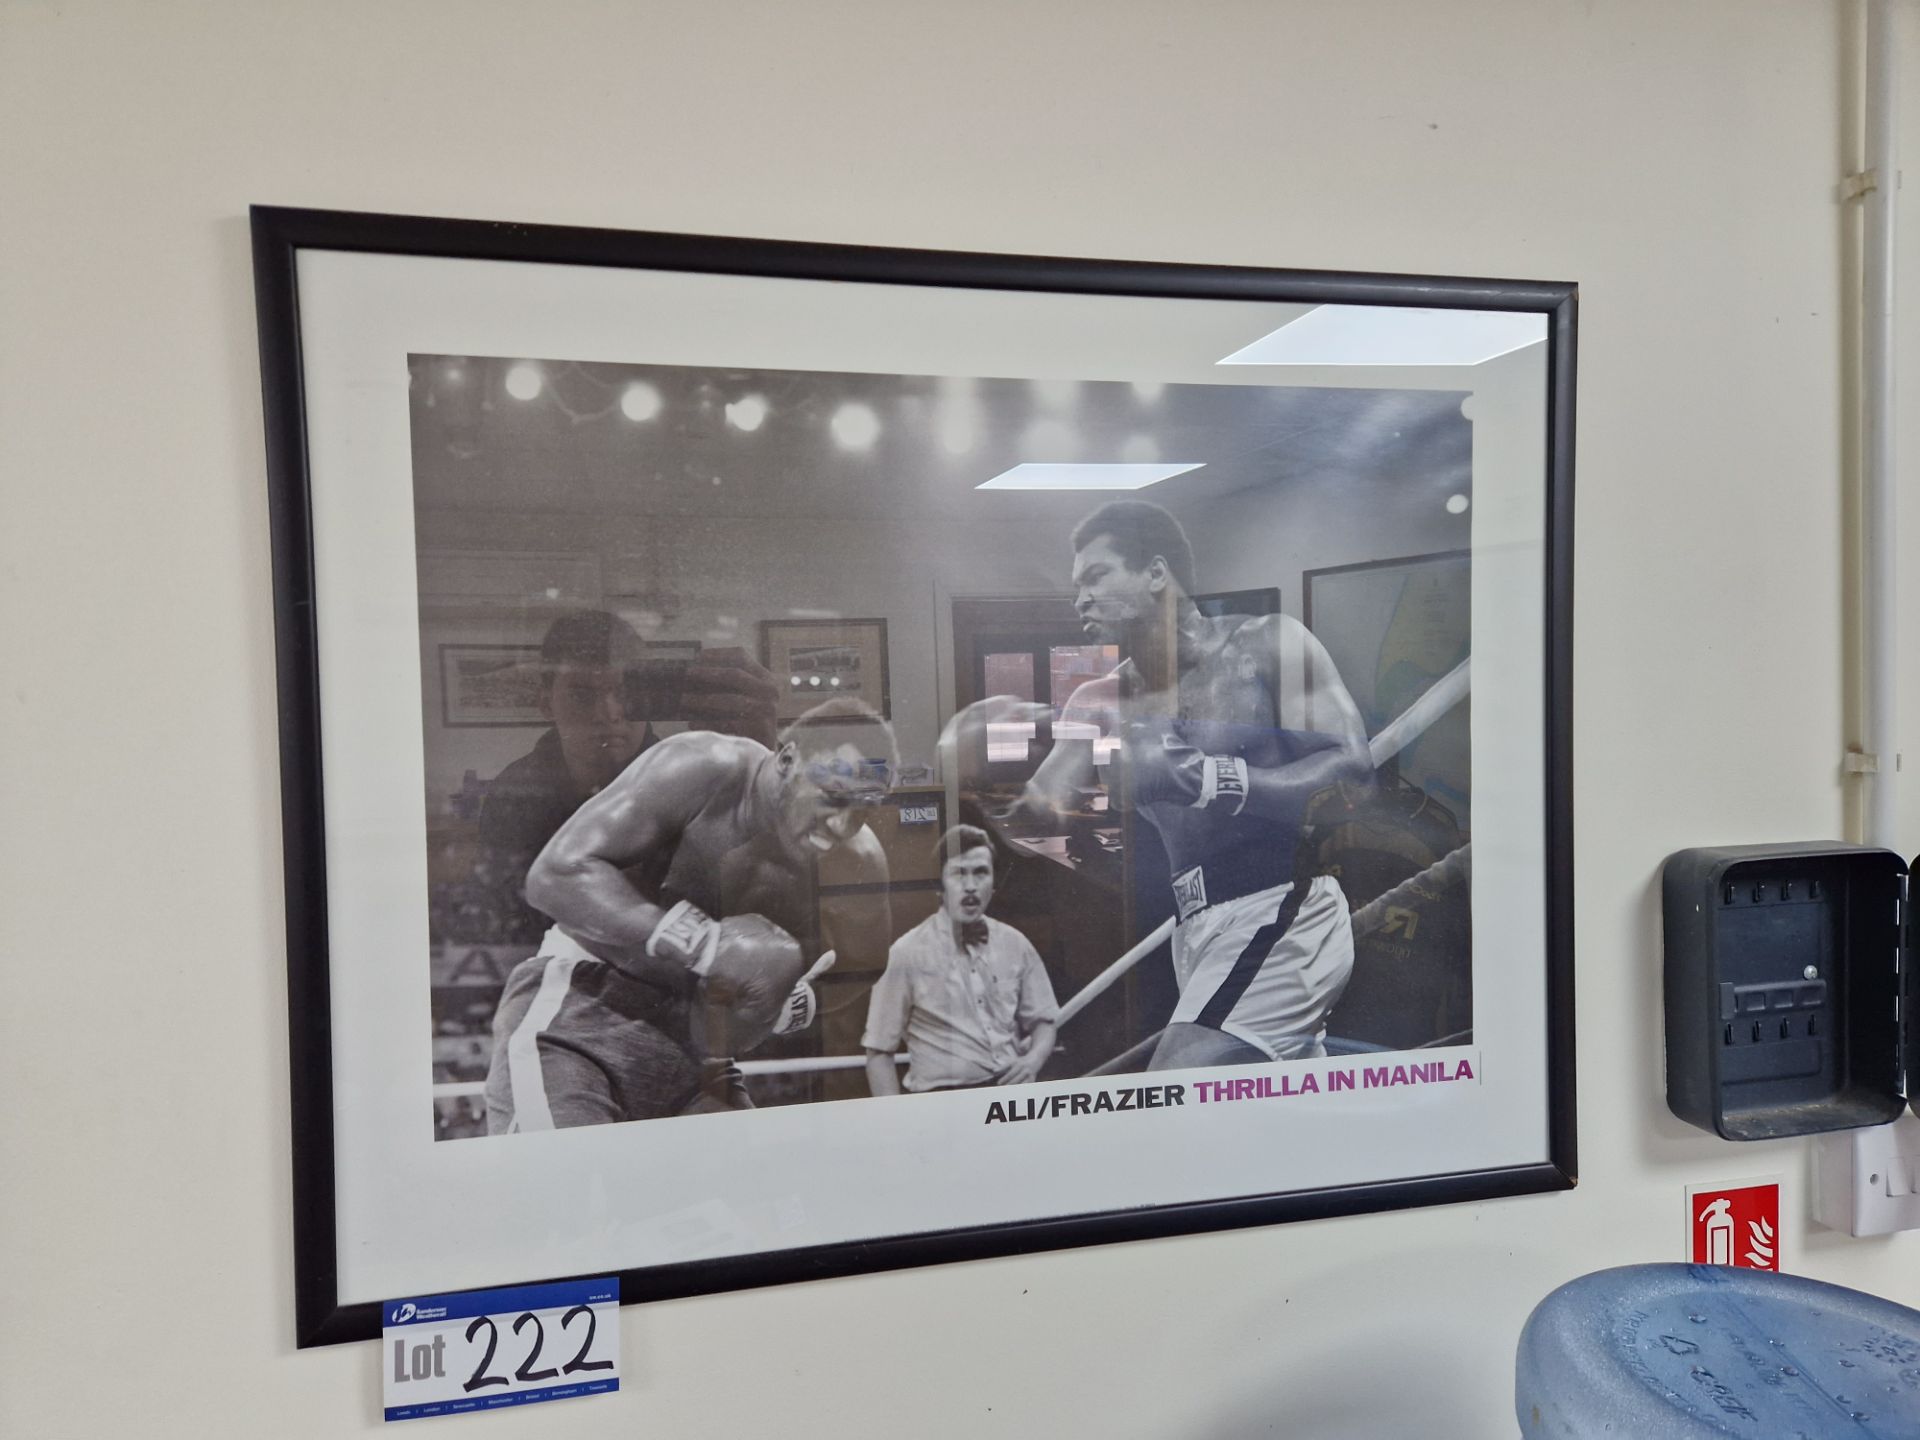 Framed Photograph of Ali/ Frazier Thriller in Manila, with framed poster of Ali v’s NortonPlease